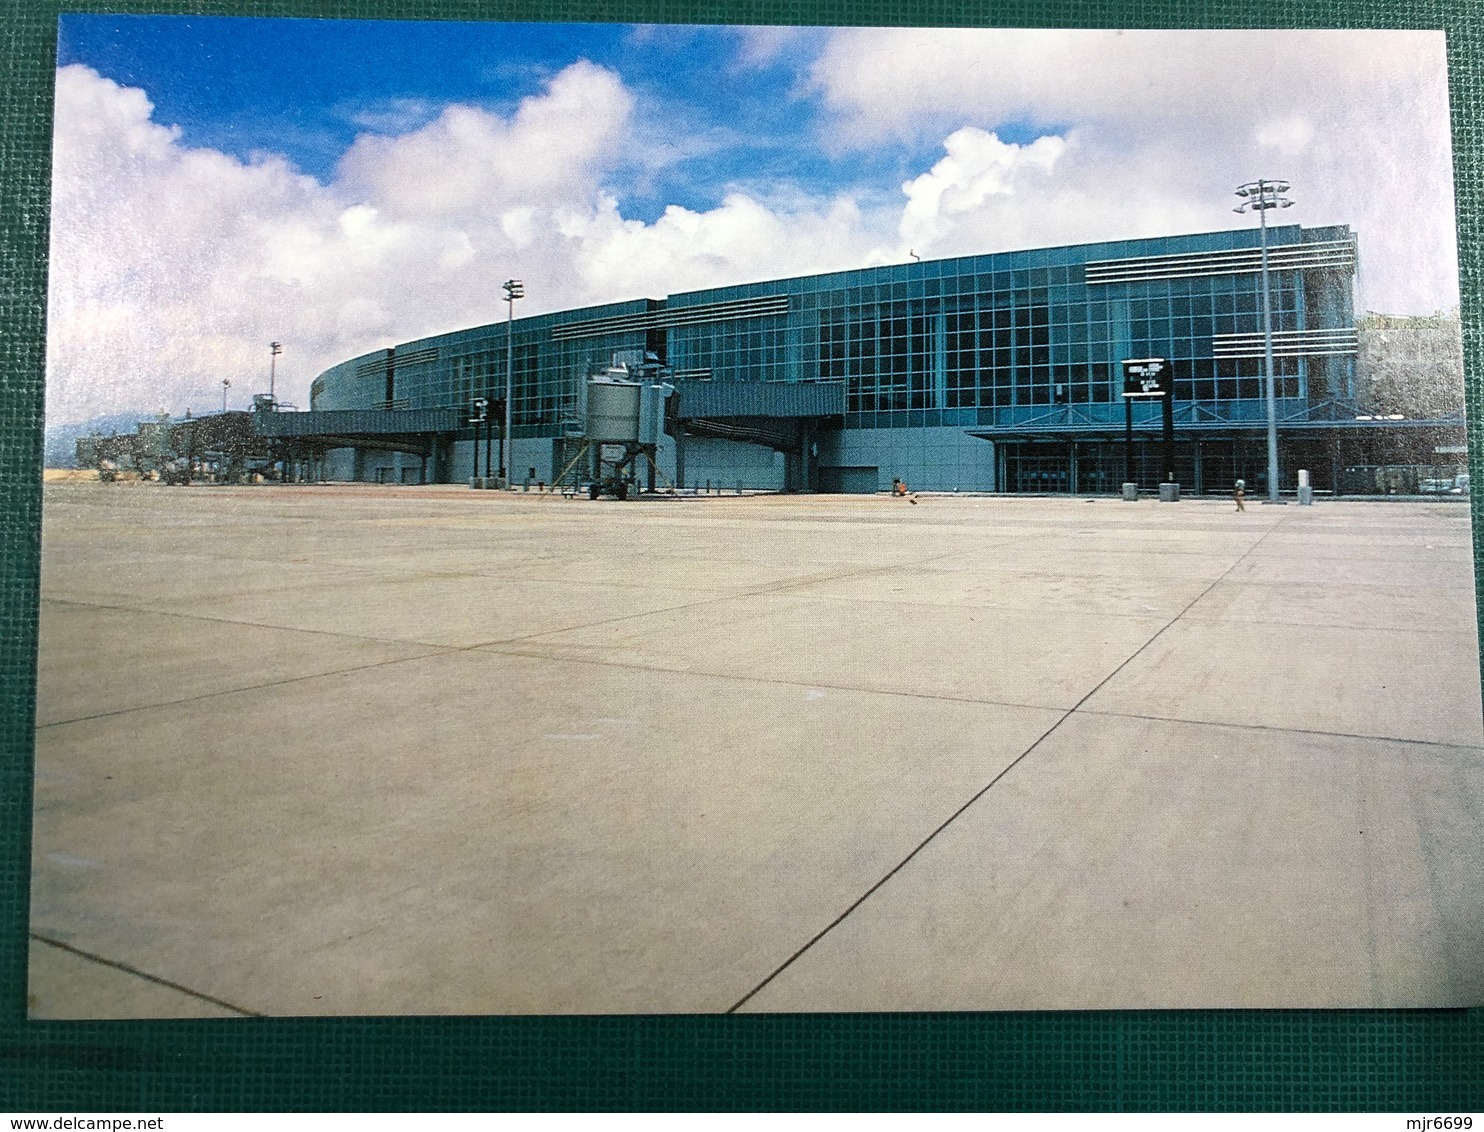 MACAU A VIEW OF THE PASSENGER TERMINAL OF THE MACAU INTERNATIONAL AIRPORT - China